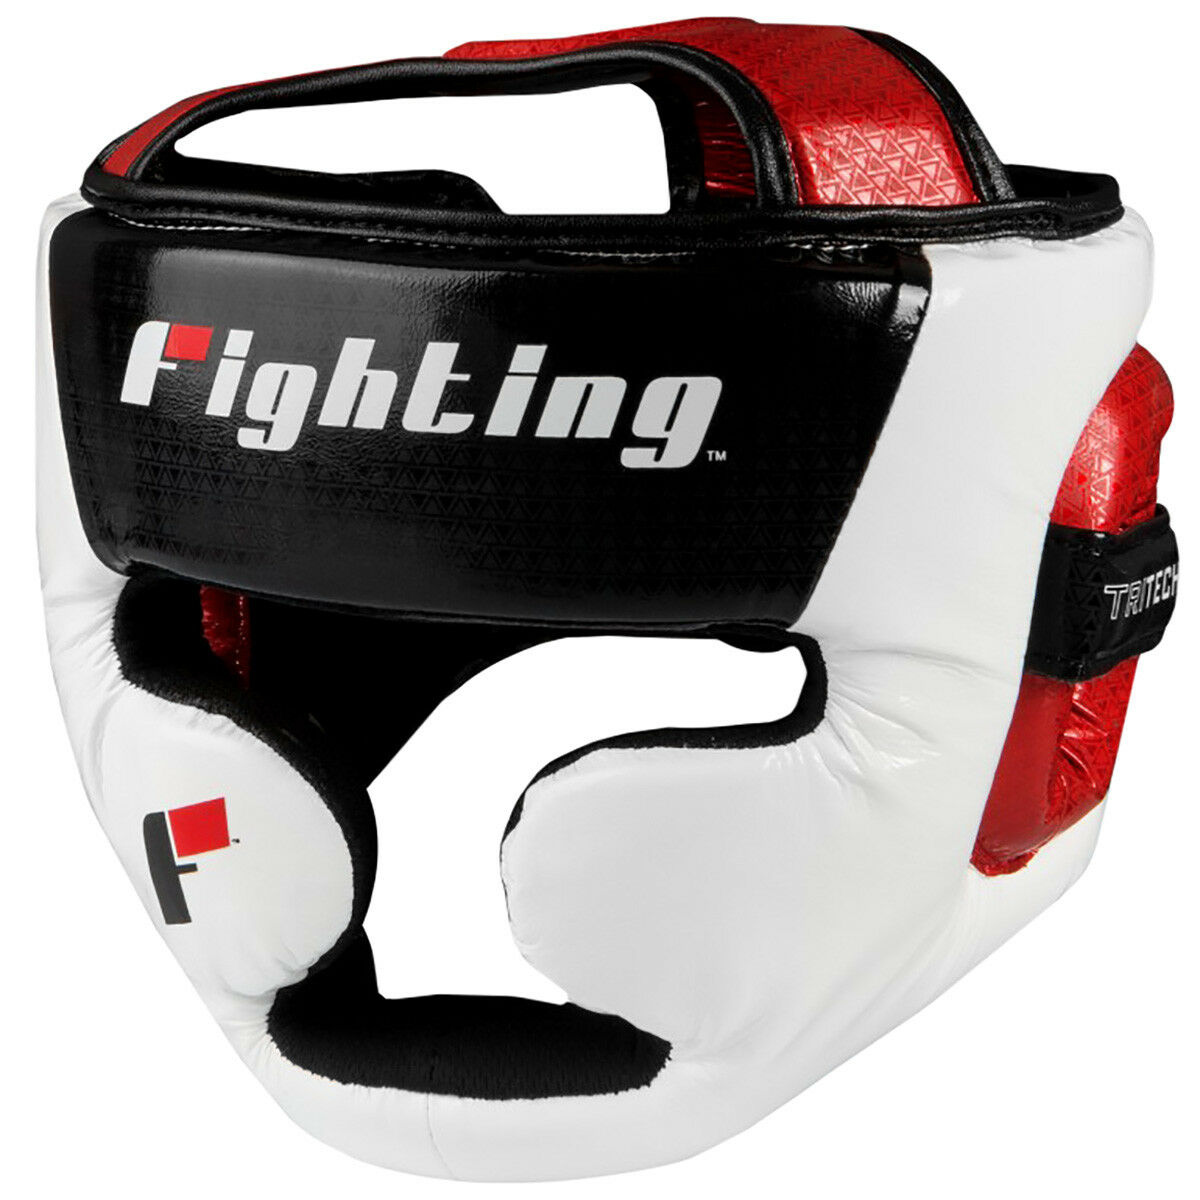 Fighting Sports Tri-tech Fascinate Full Training Headgear - Black/white/red